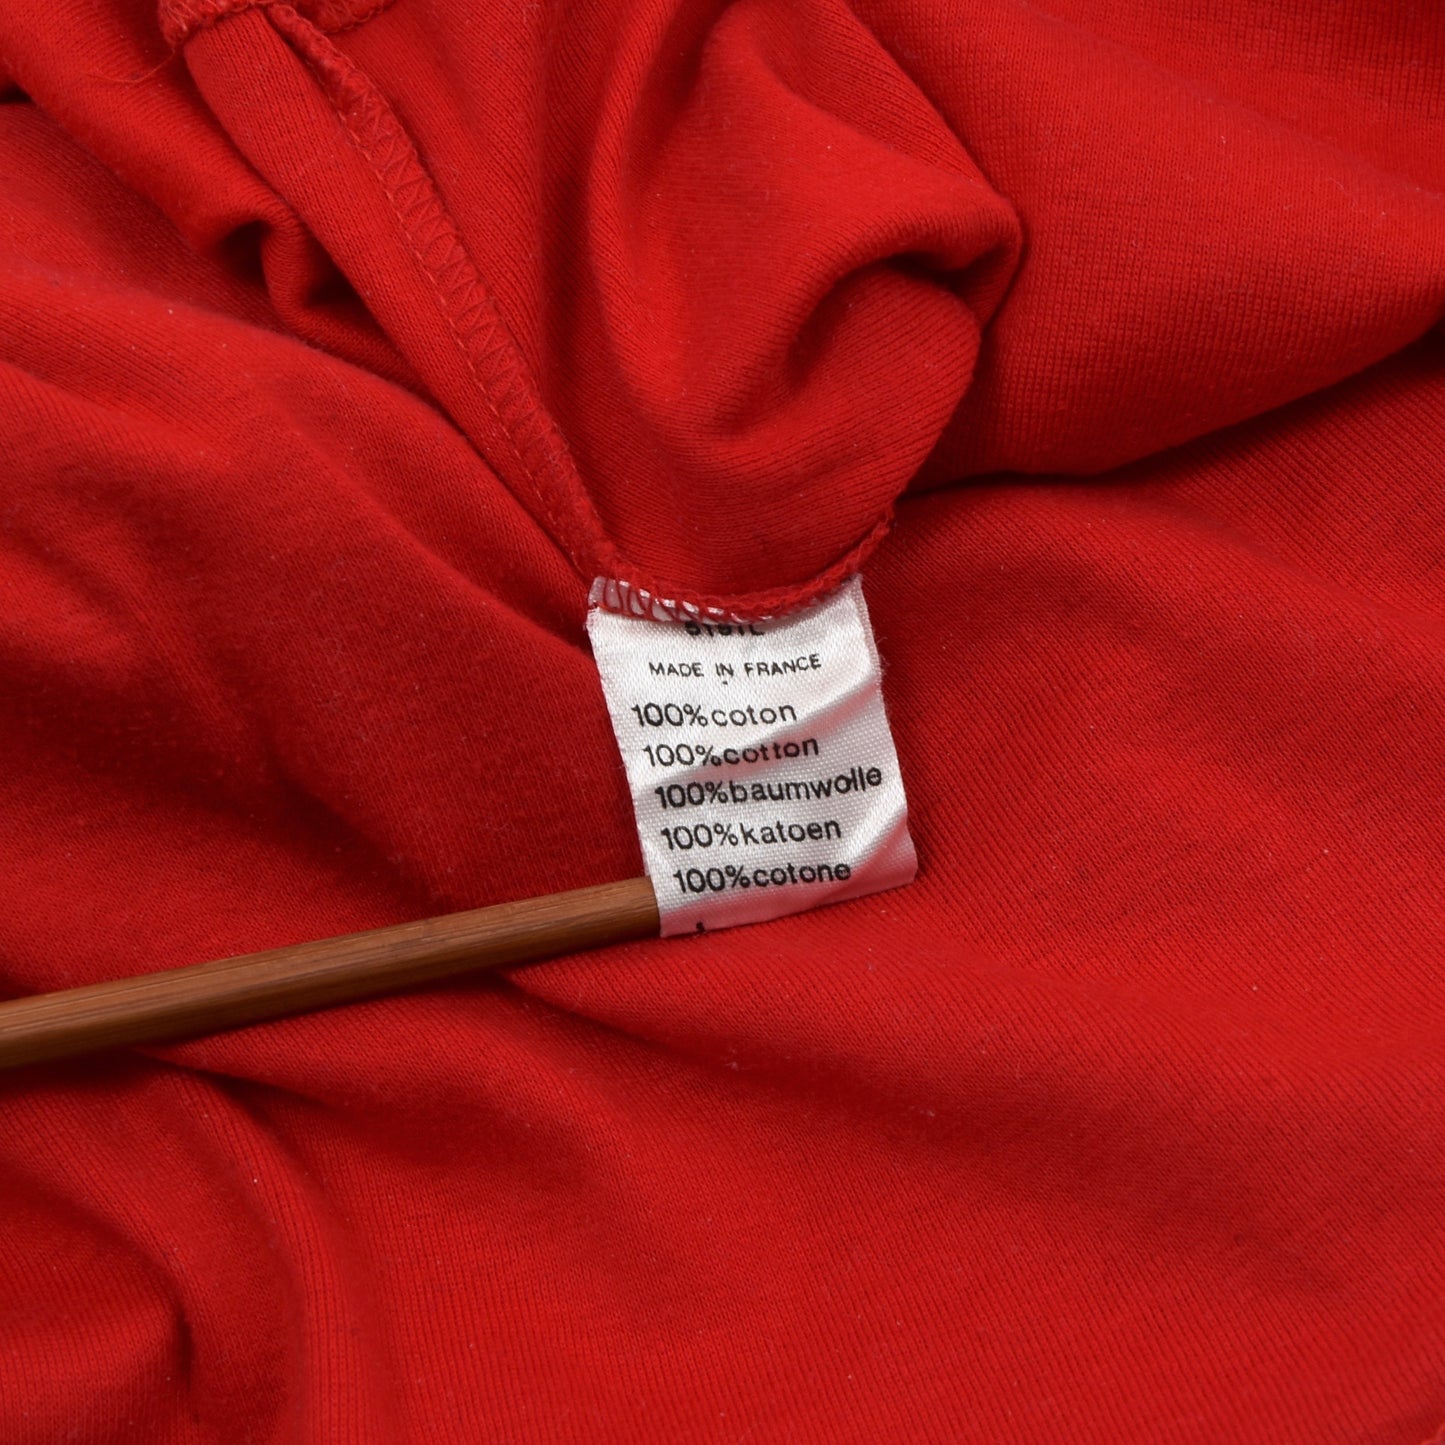 2x Vintage Lacoste Cotton Turtleneck Sweaters Size 6 - Red & Navy Blue